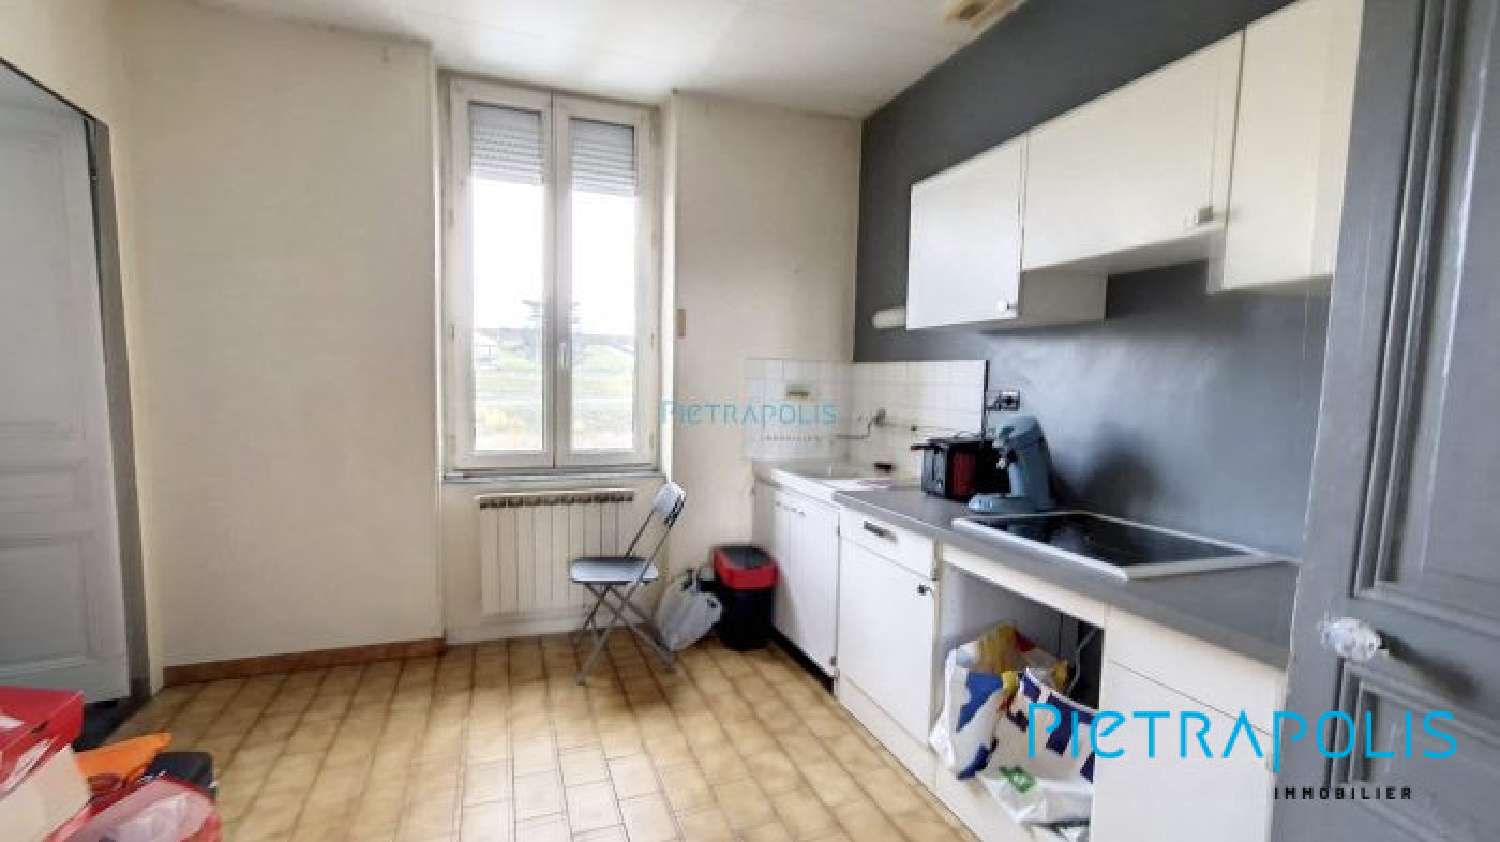  à vendre appartement Ternay Rhône 2